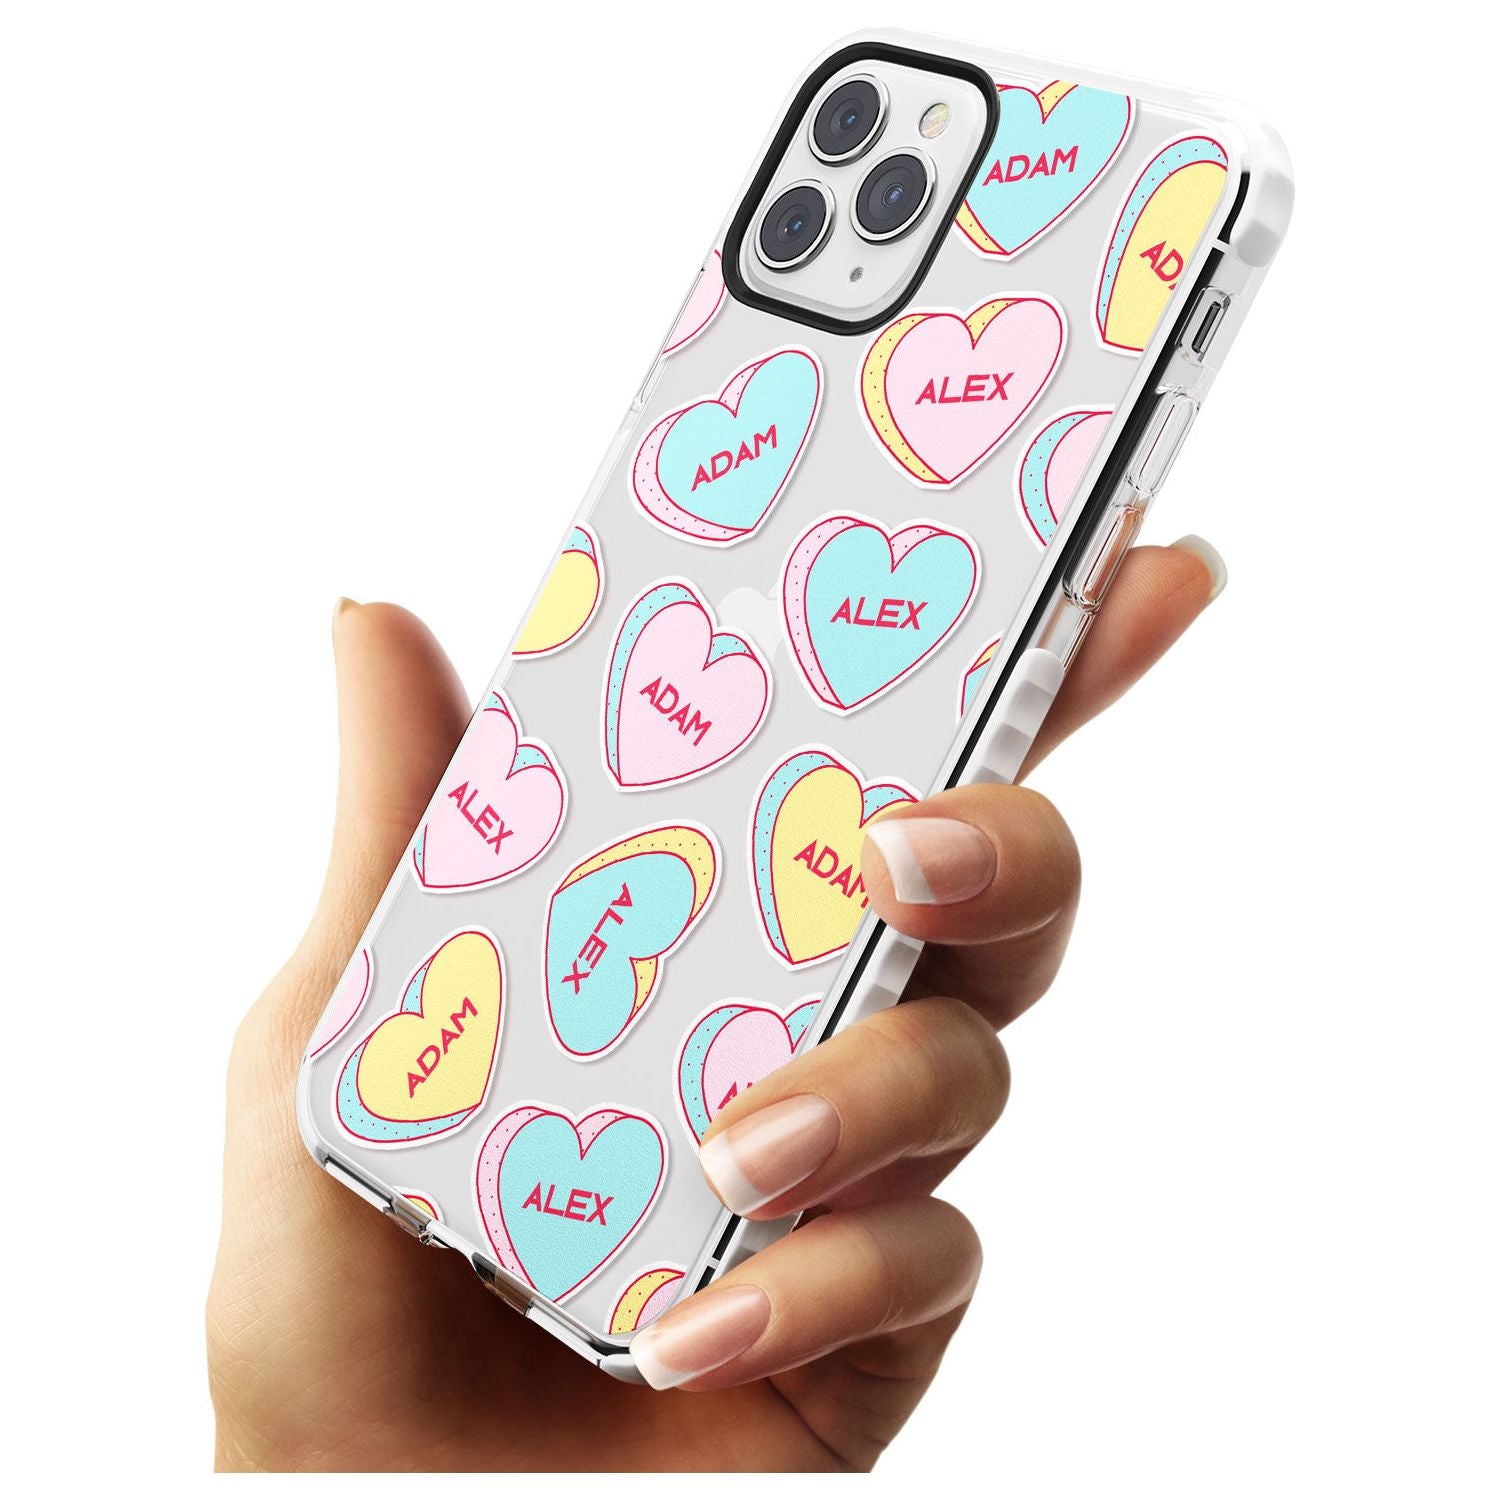 Custom Text Love Hearts Slim TPU Phone Case for iPhone 11 Pro Max